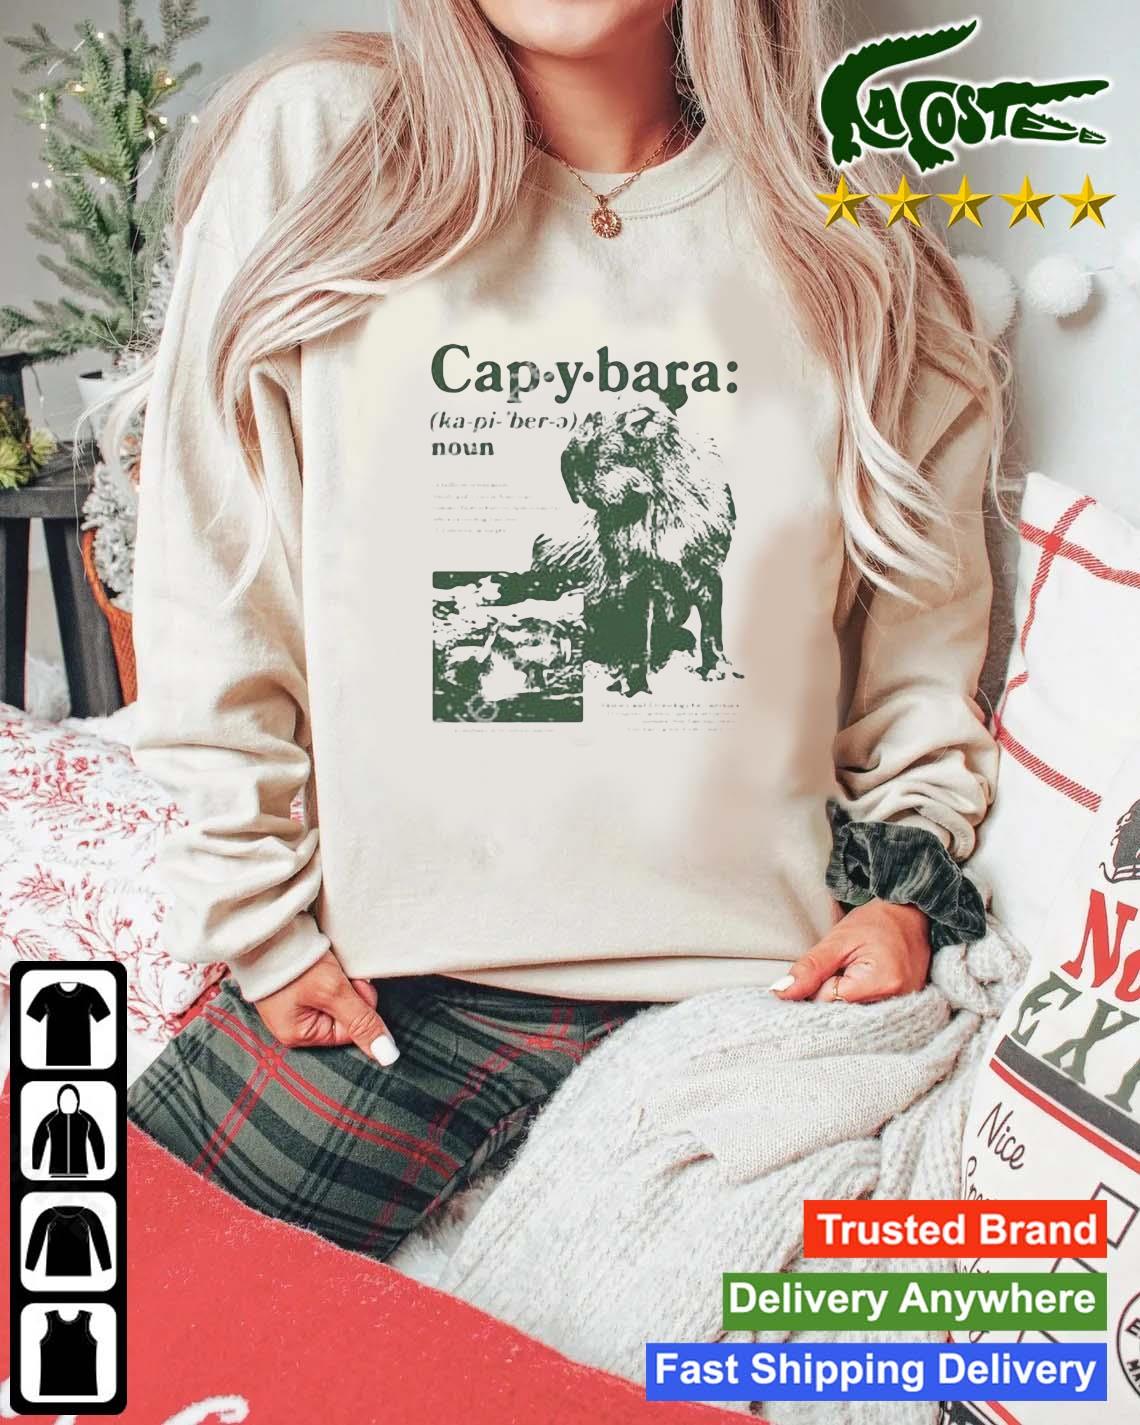 Capybara Noun Defined Sweats Mockup Sweater